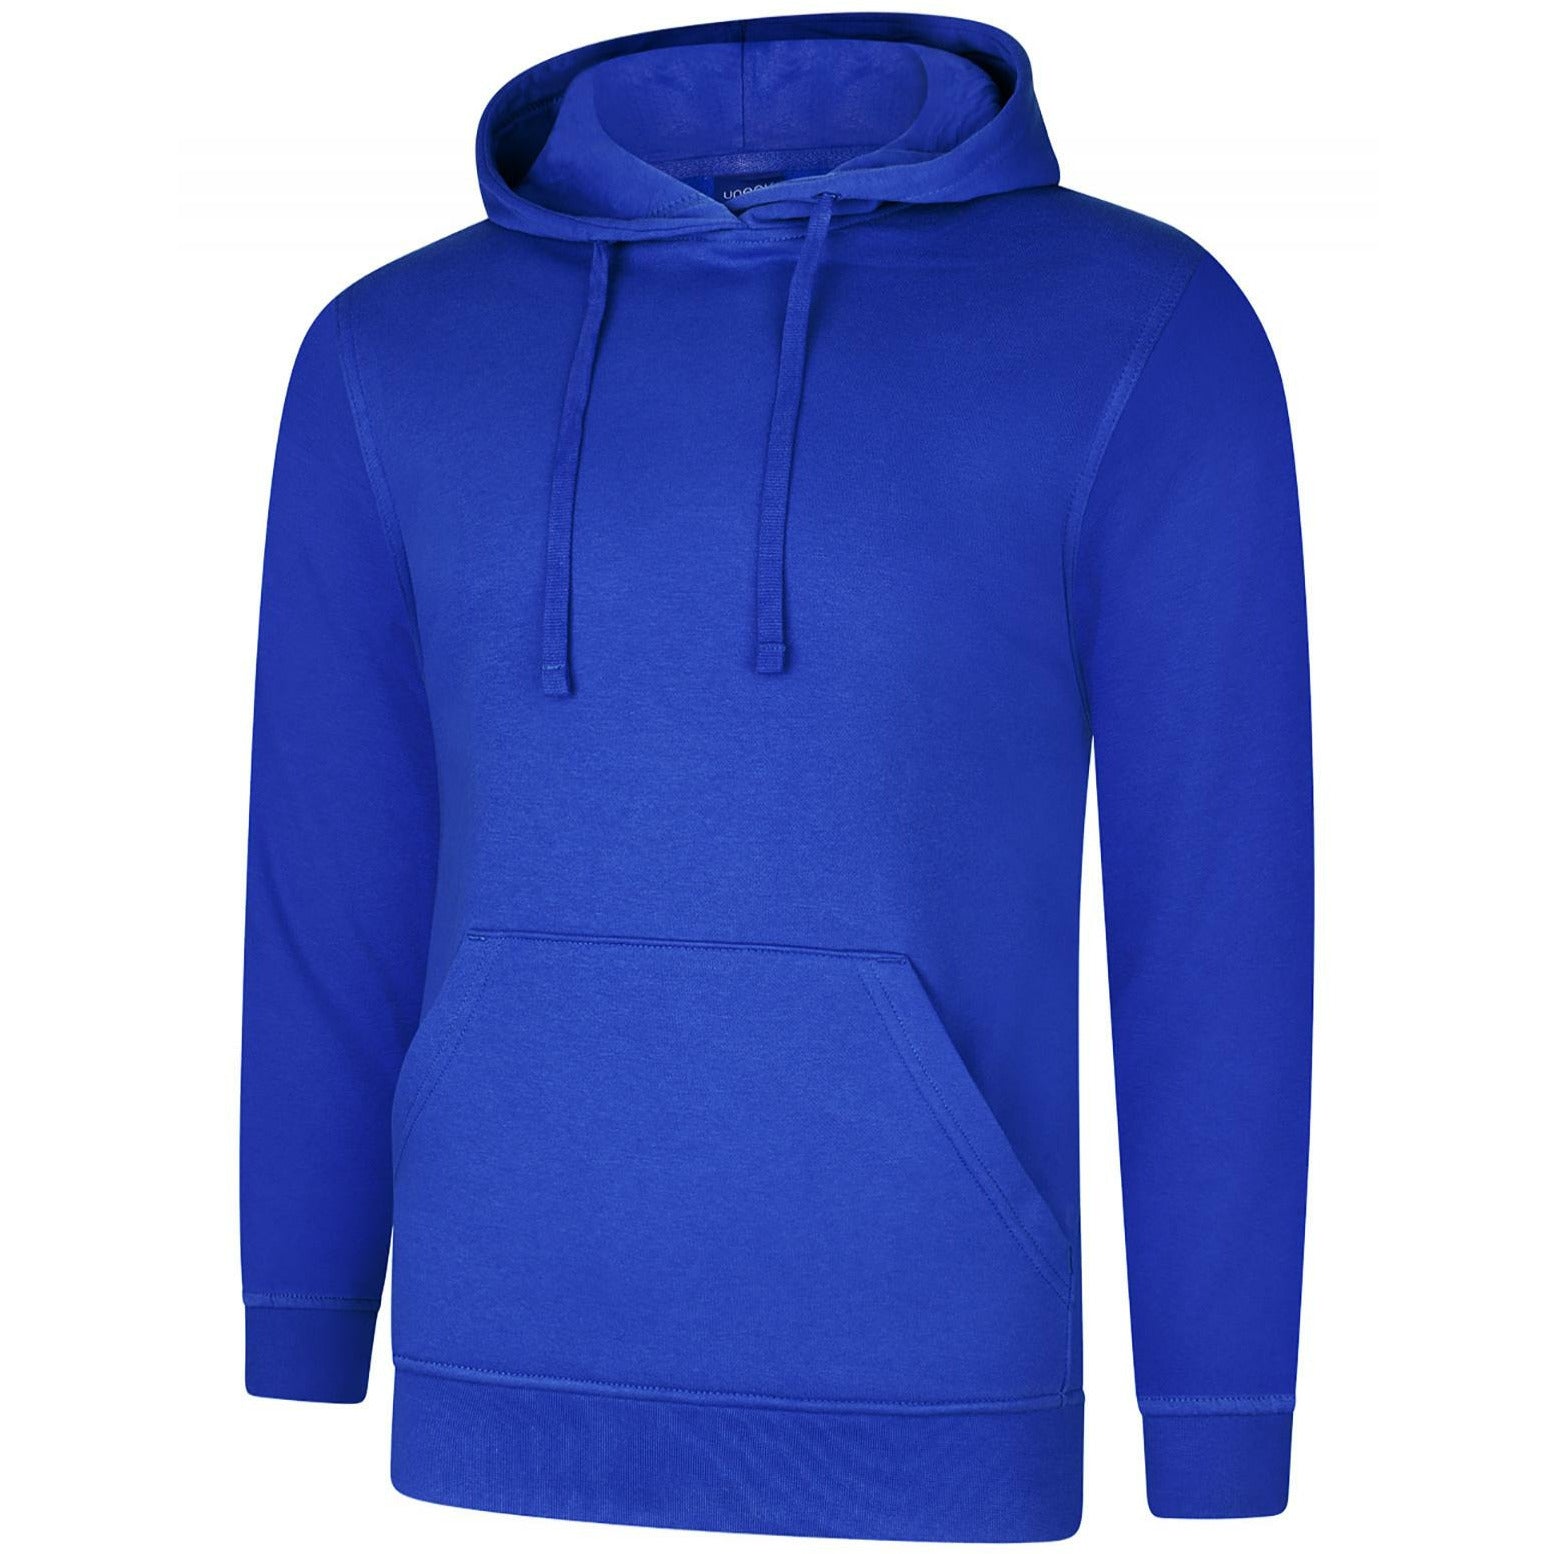 Deluxe Hooded Sweatshirt (L - 2XL) Royal Blue